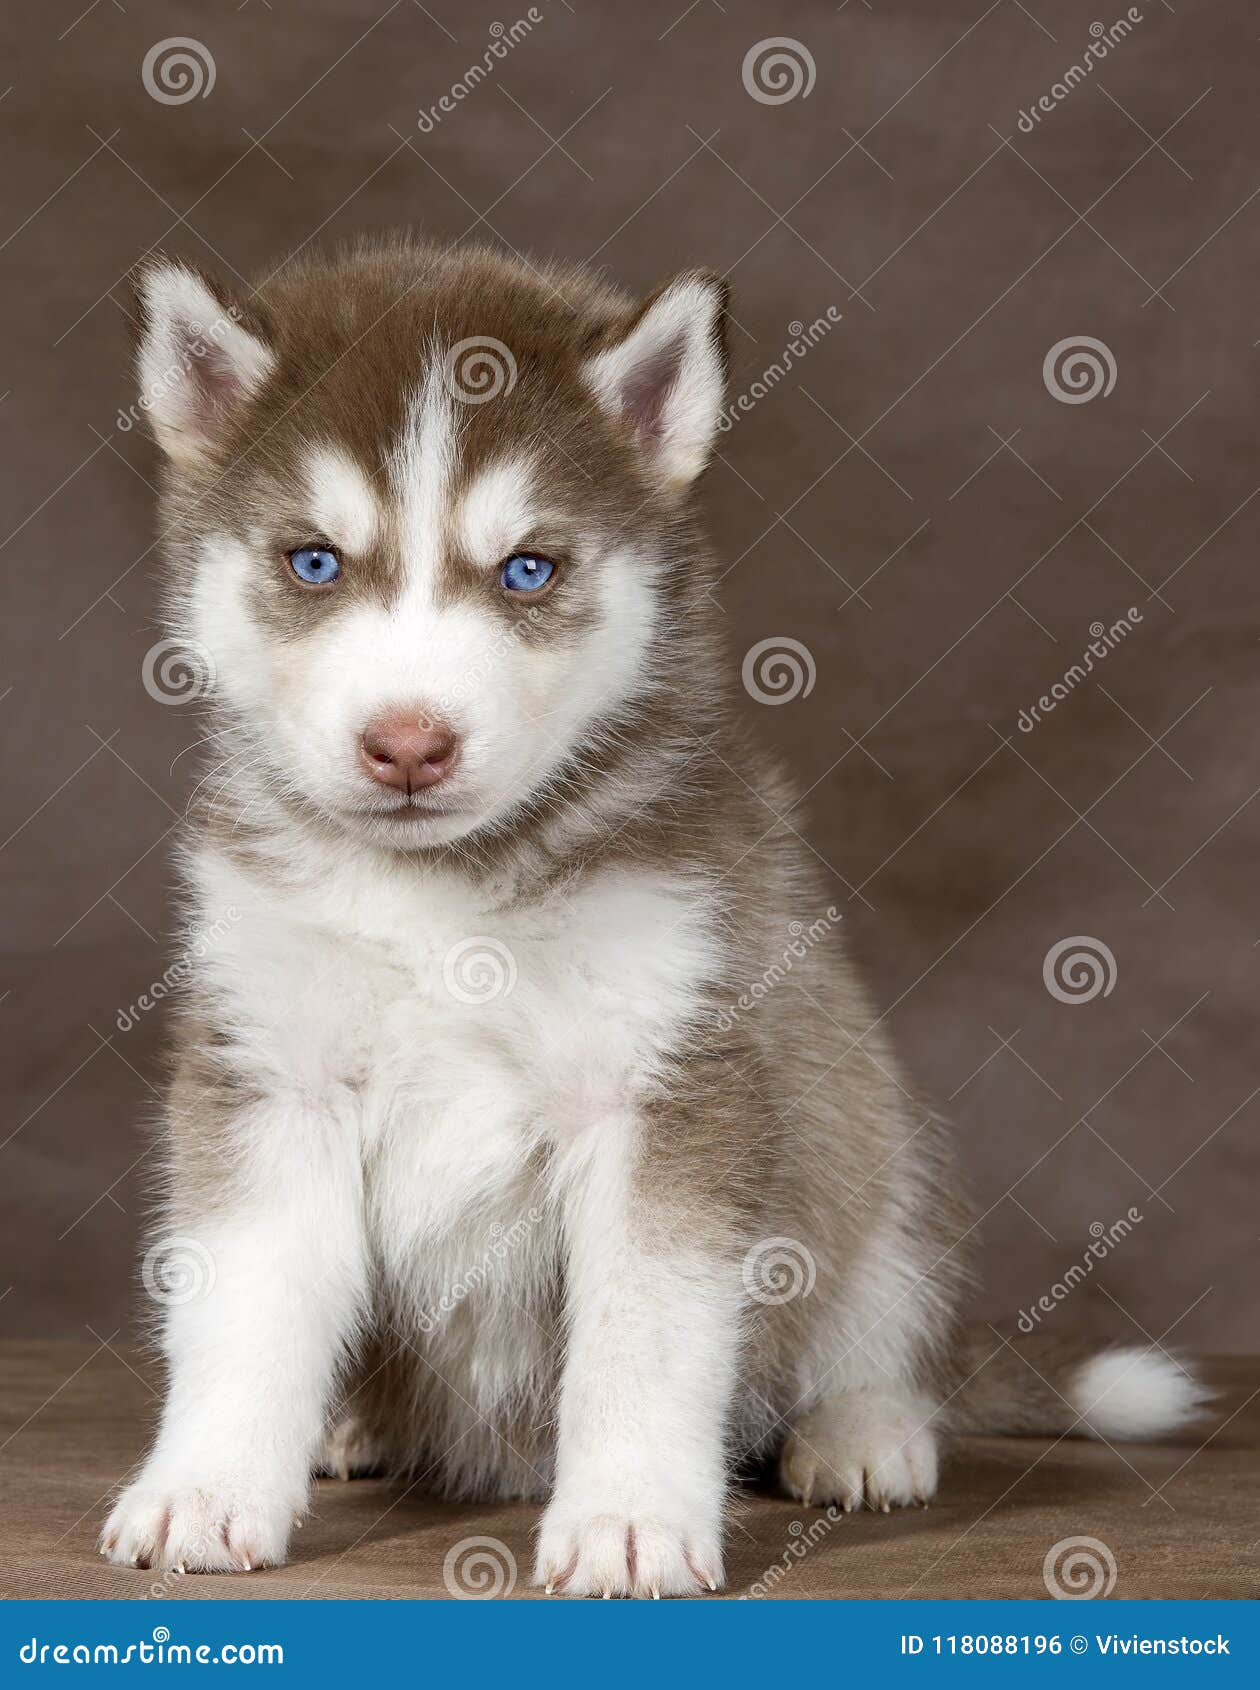 siberian husky small dogs